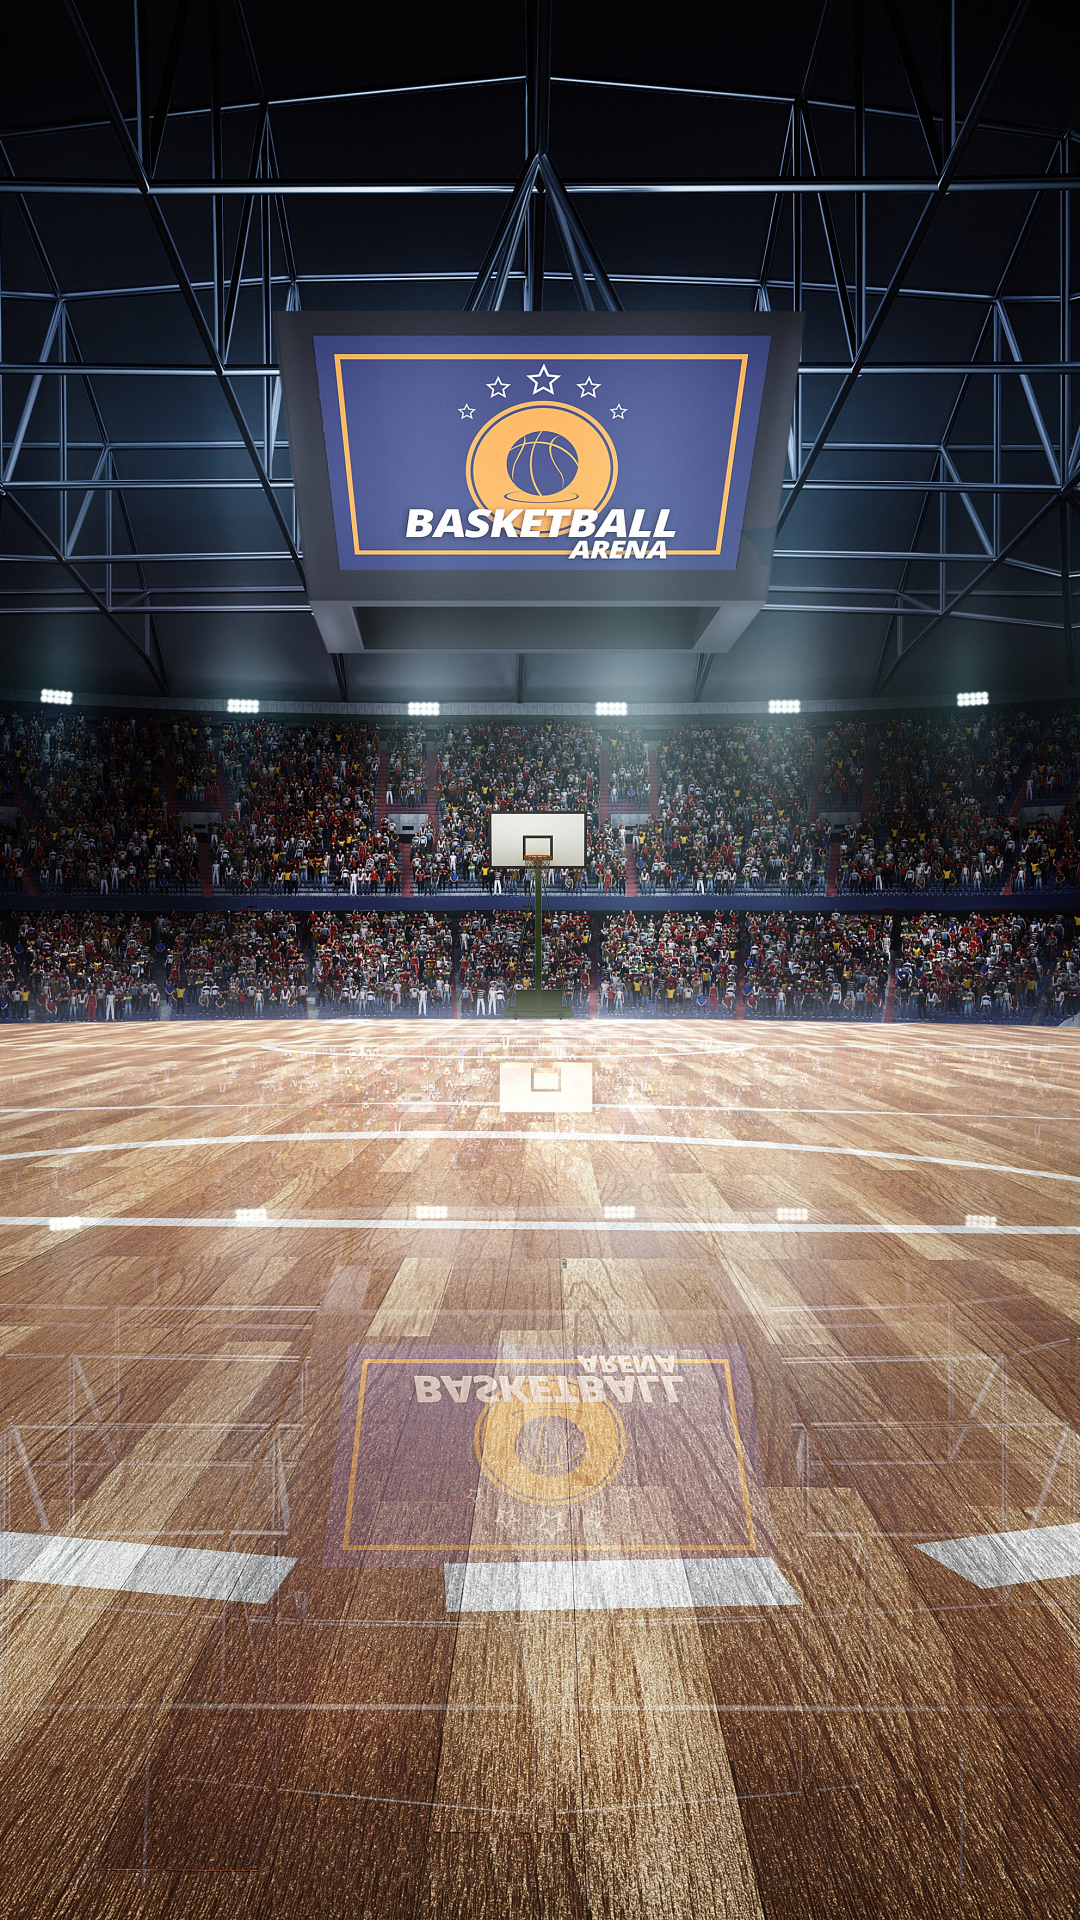 Descarga gratuita de fondo de pantalla para móvil de Baloncesto, Deporte.